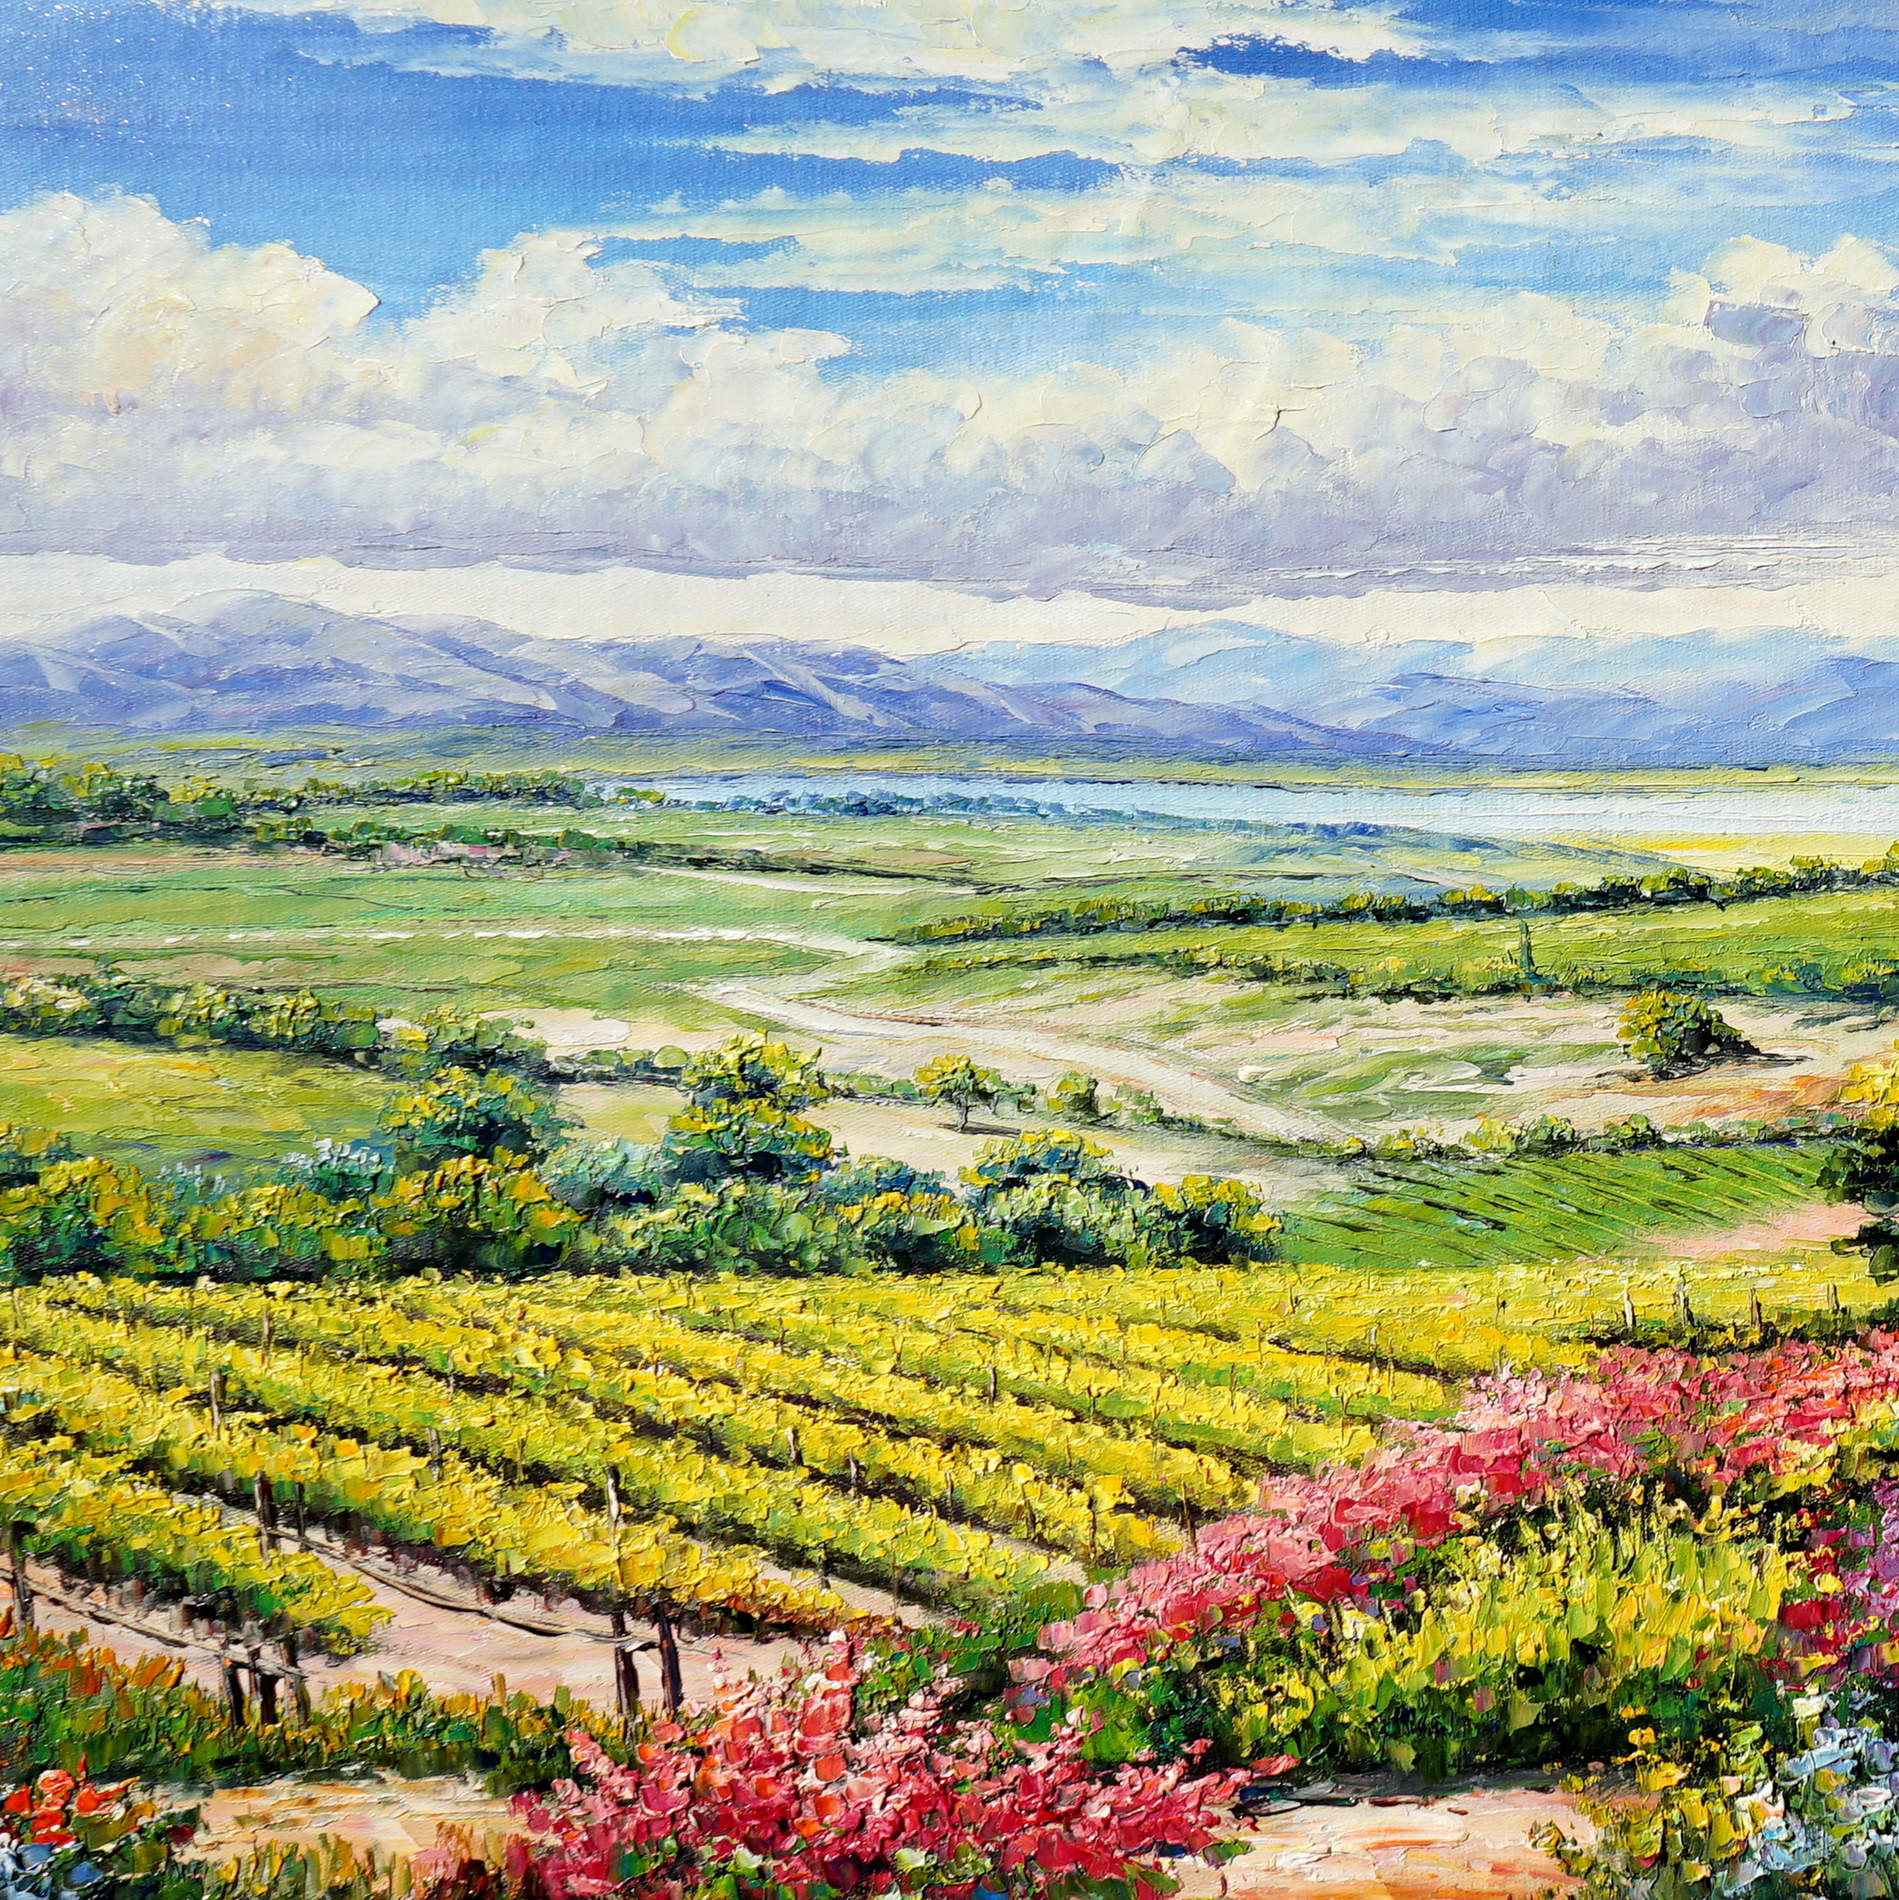 Hand painted Tuscan vineyard landscape 60x120cm